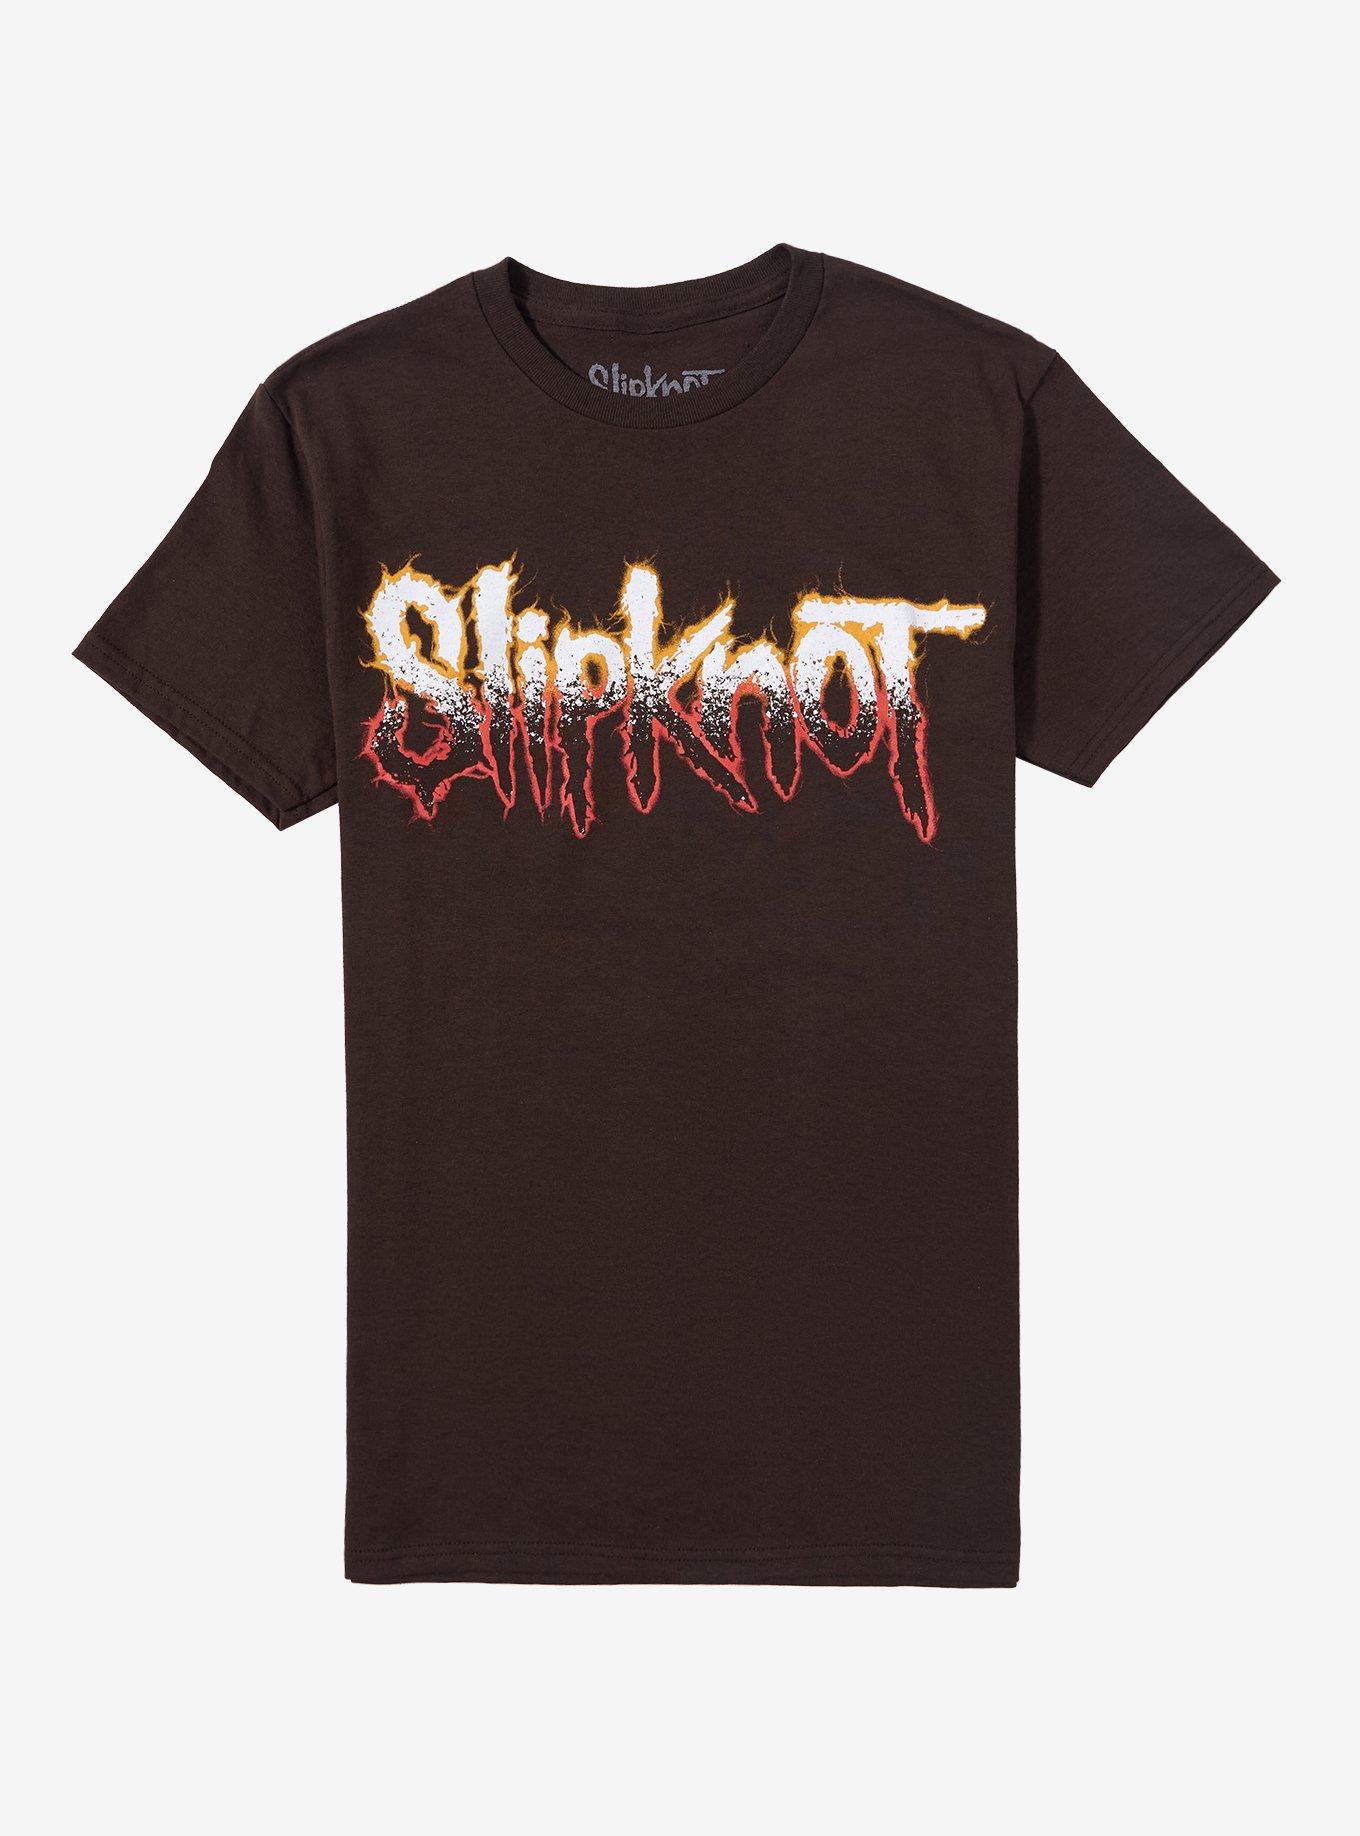 Slipknot Goat Skulls Brown Two-Sided Boyfriend Fit Girls T-Shirt, BROWN, hi-res